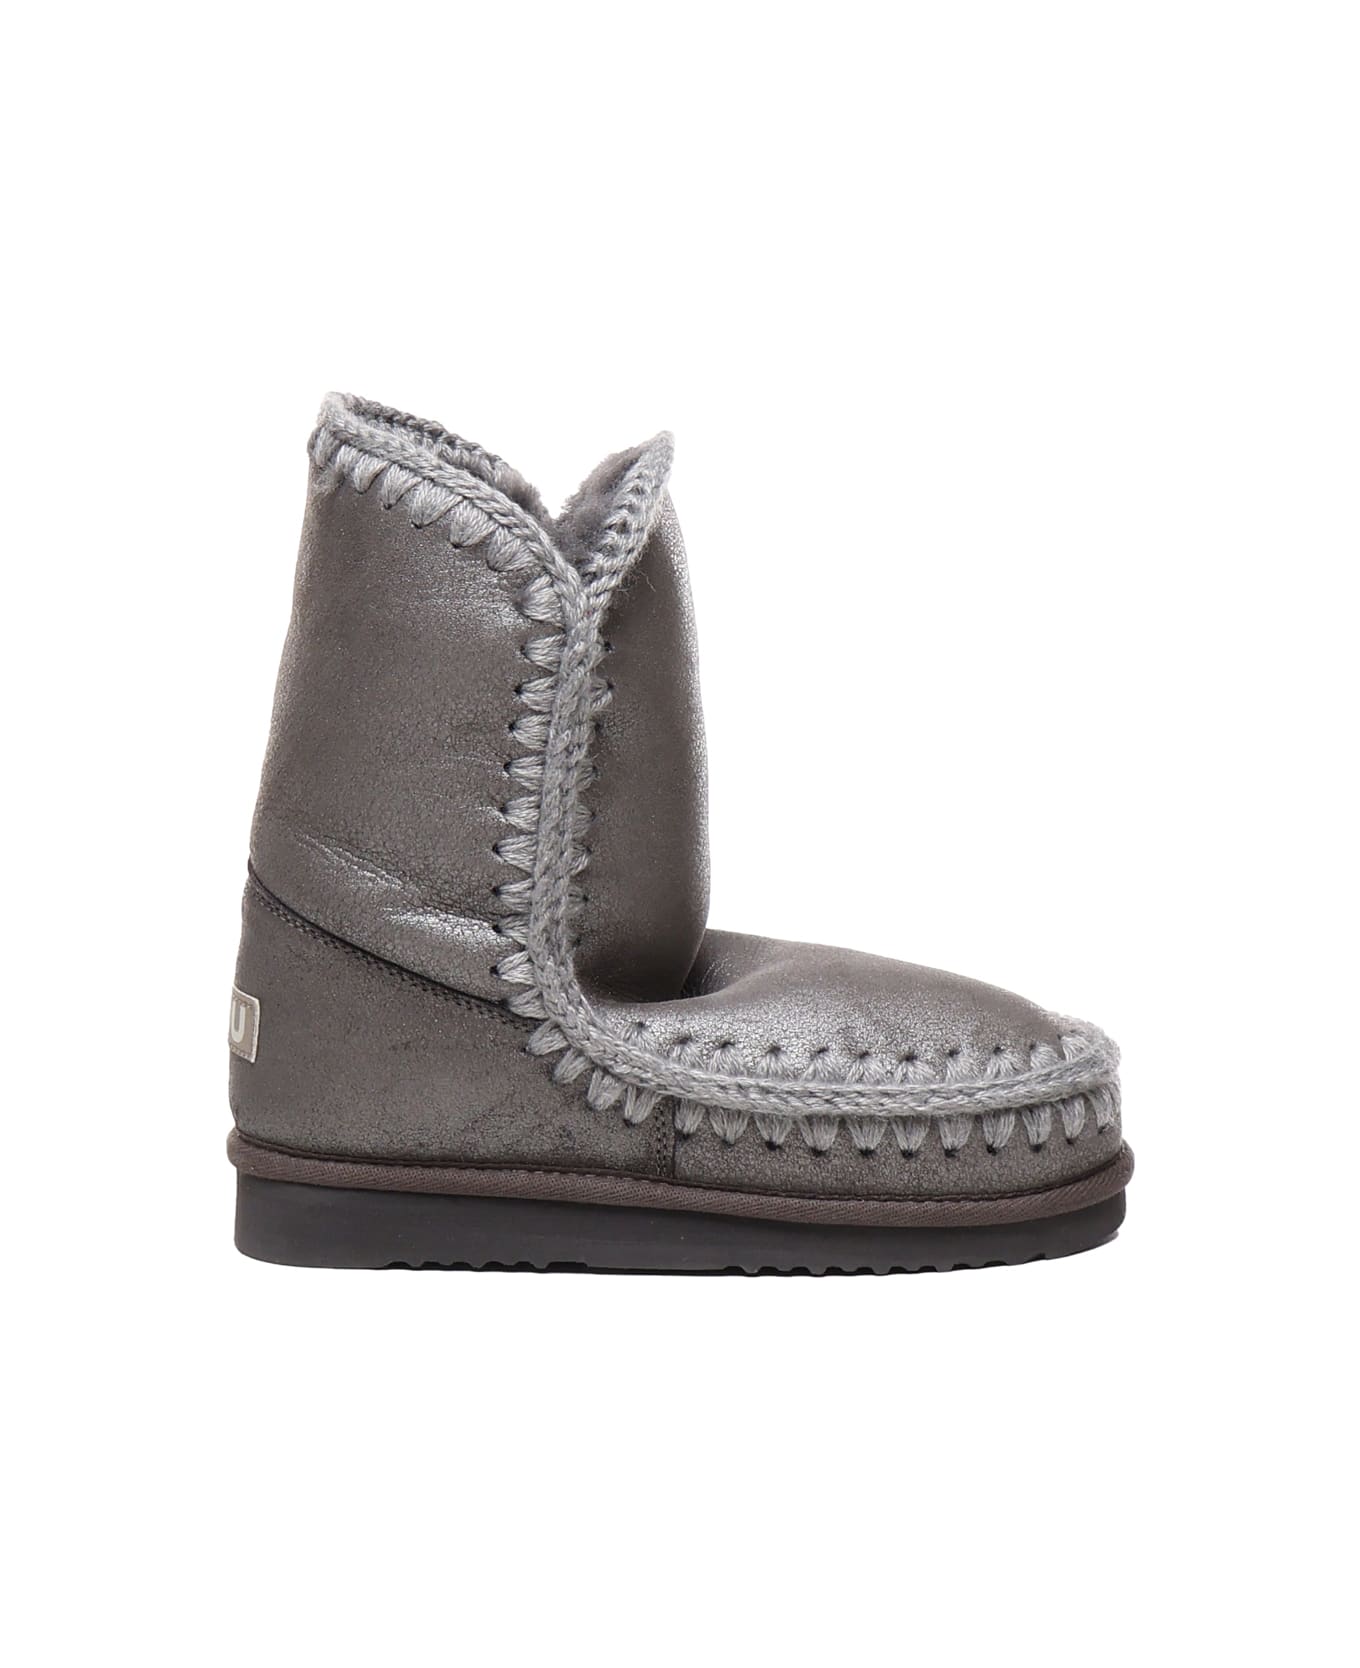 Mou Eskimo Boots 24 - Grey